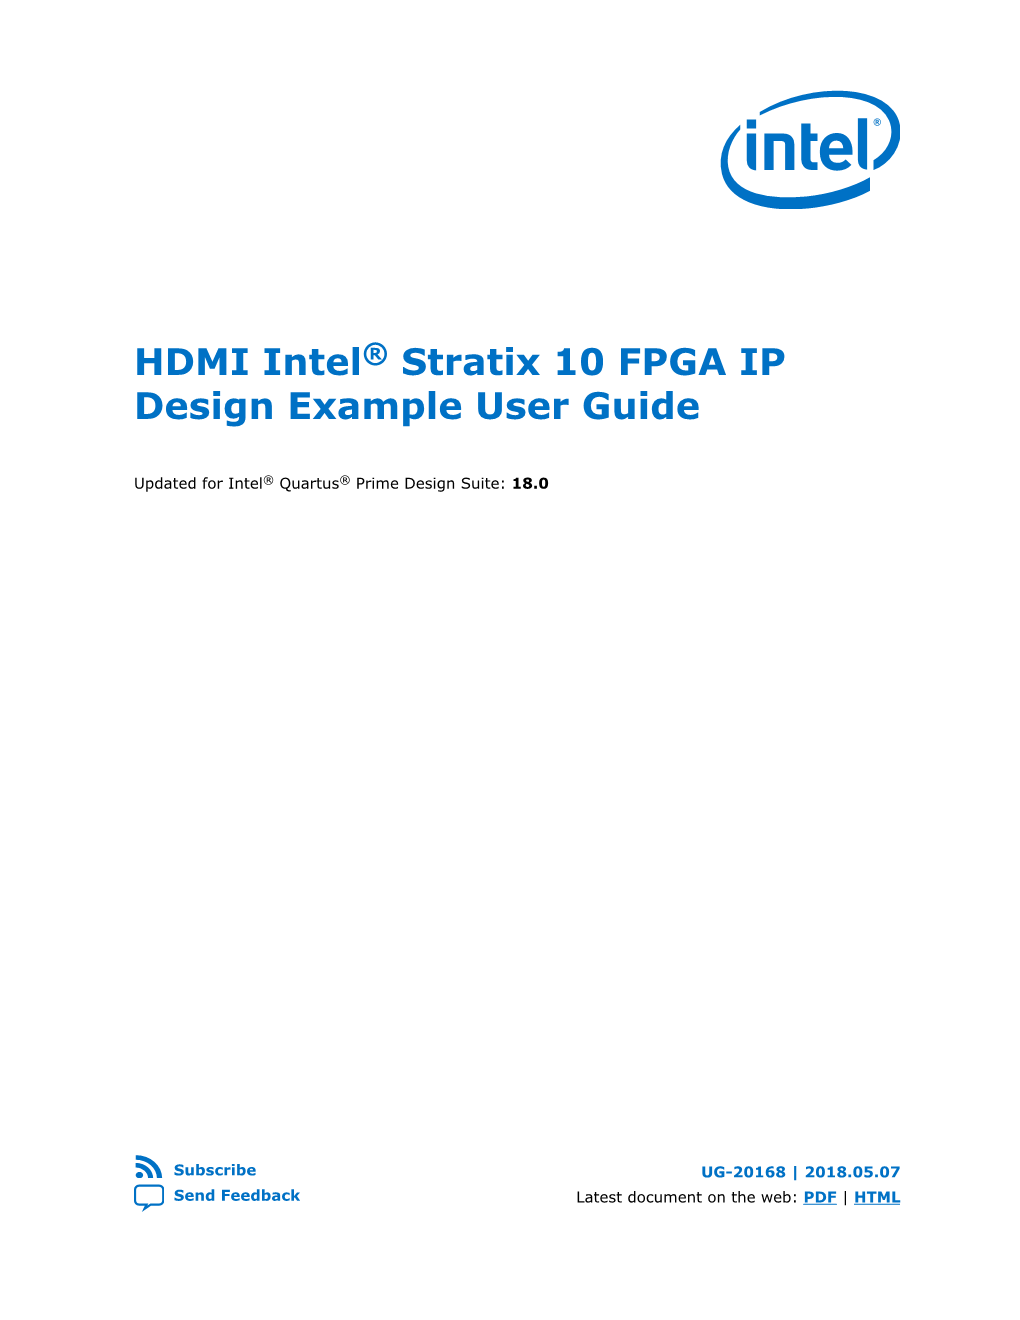 HDMI Intel® Stratix 10 FPGA IP Design Example User Guide